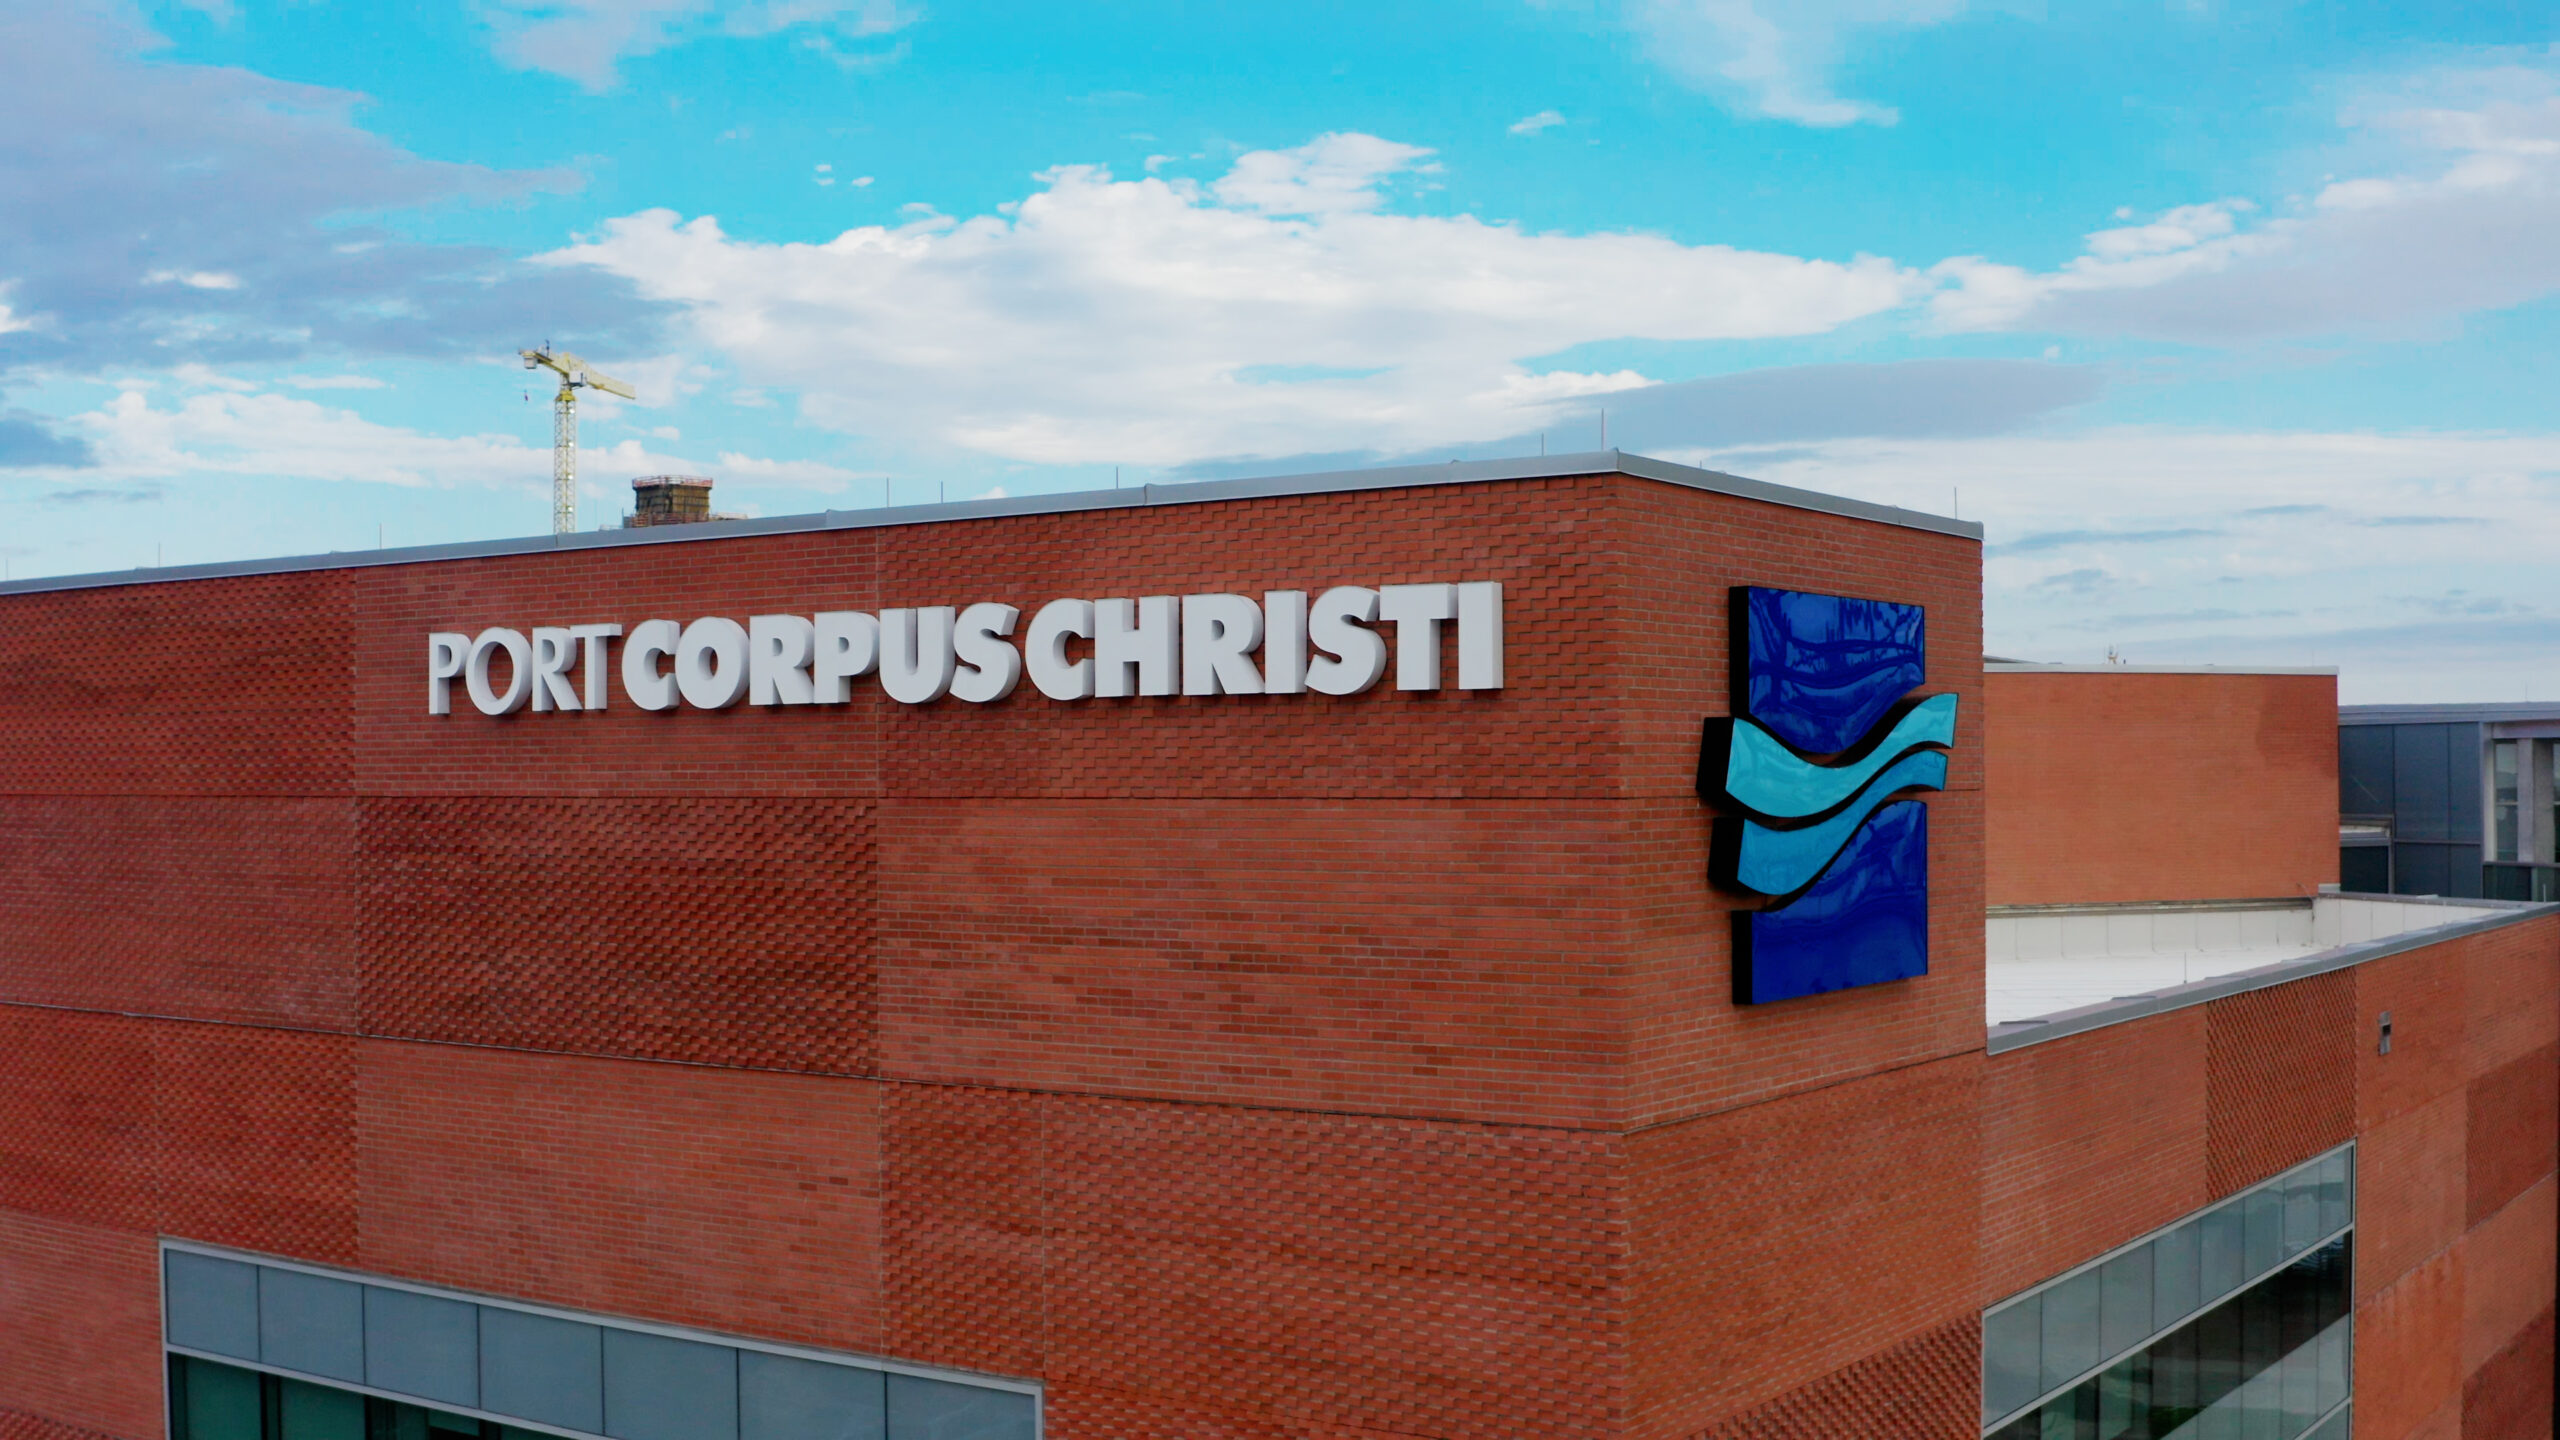 Corpus christi port authority jobs